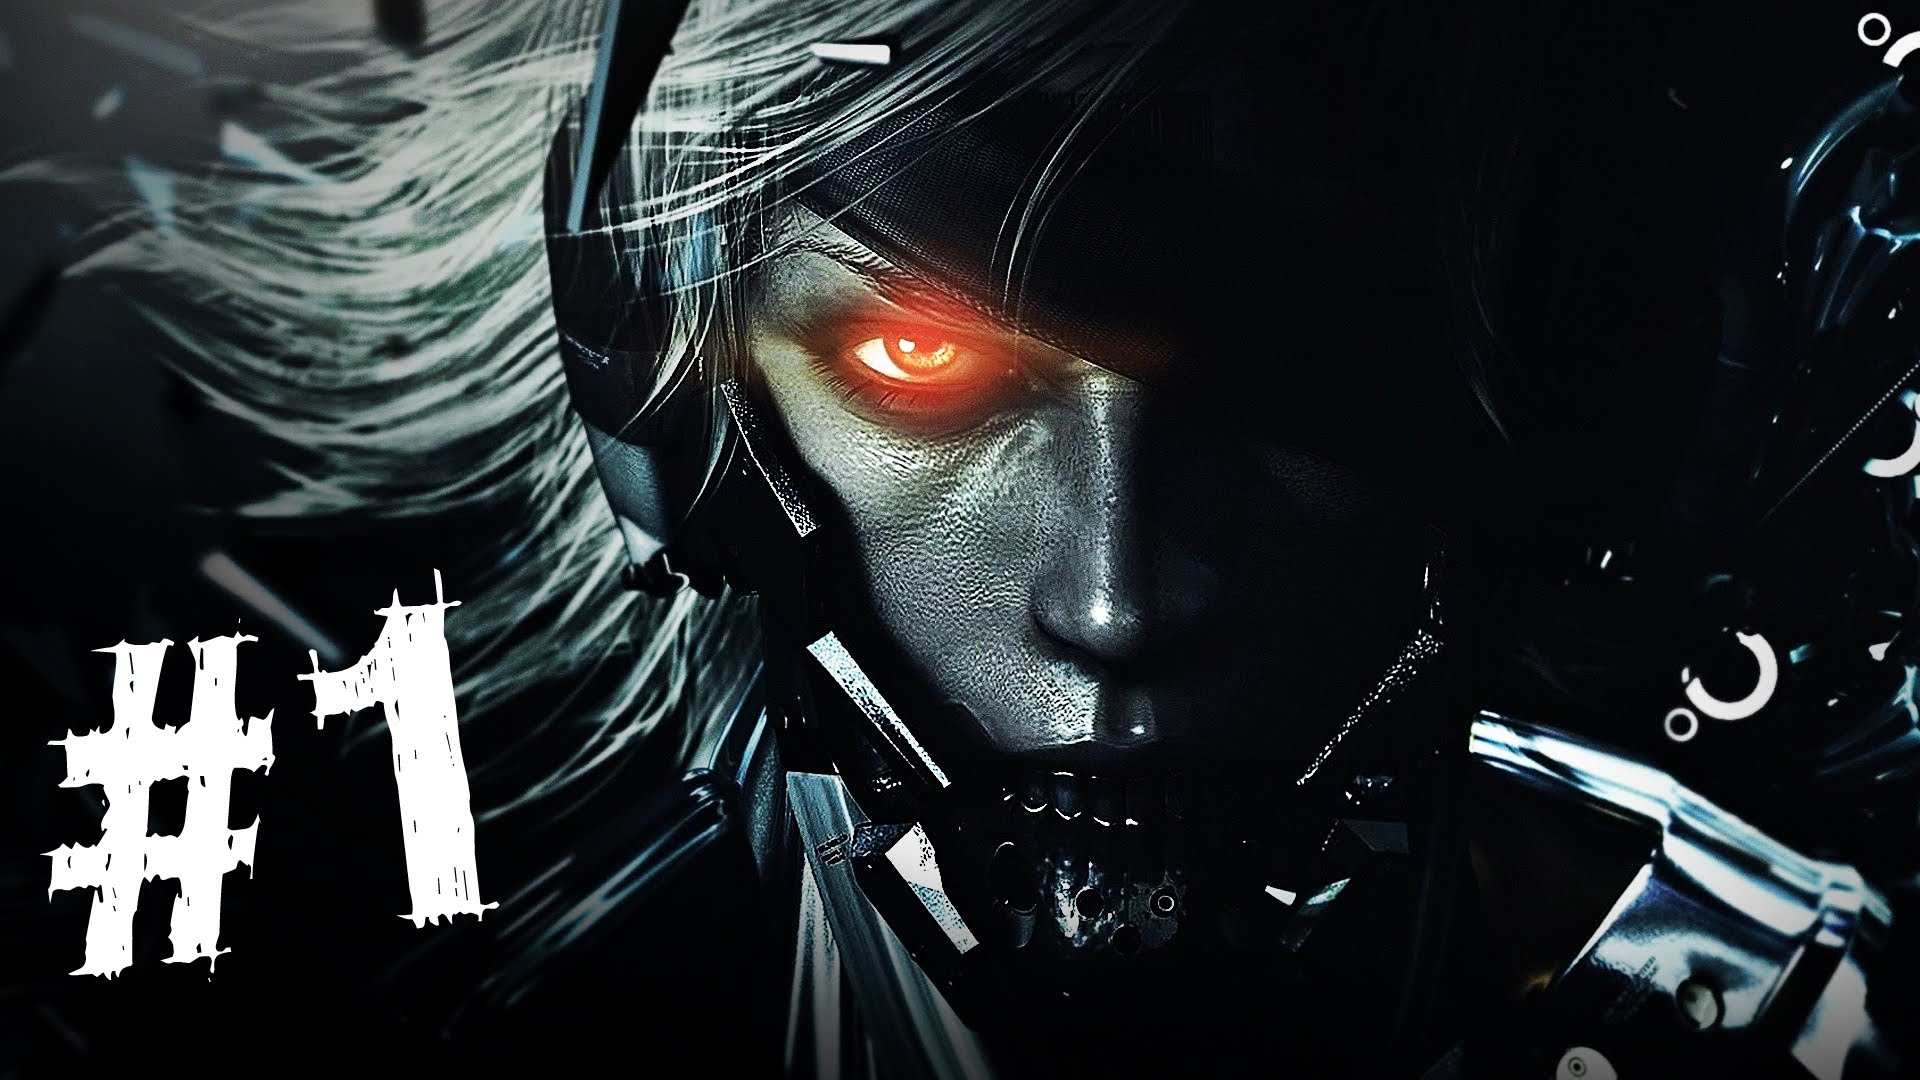 Metal Gear Rising: Revengeance HD wallpapers, Desktop wallpaper - most viewed